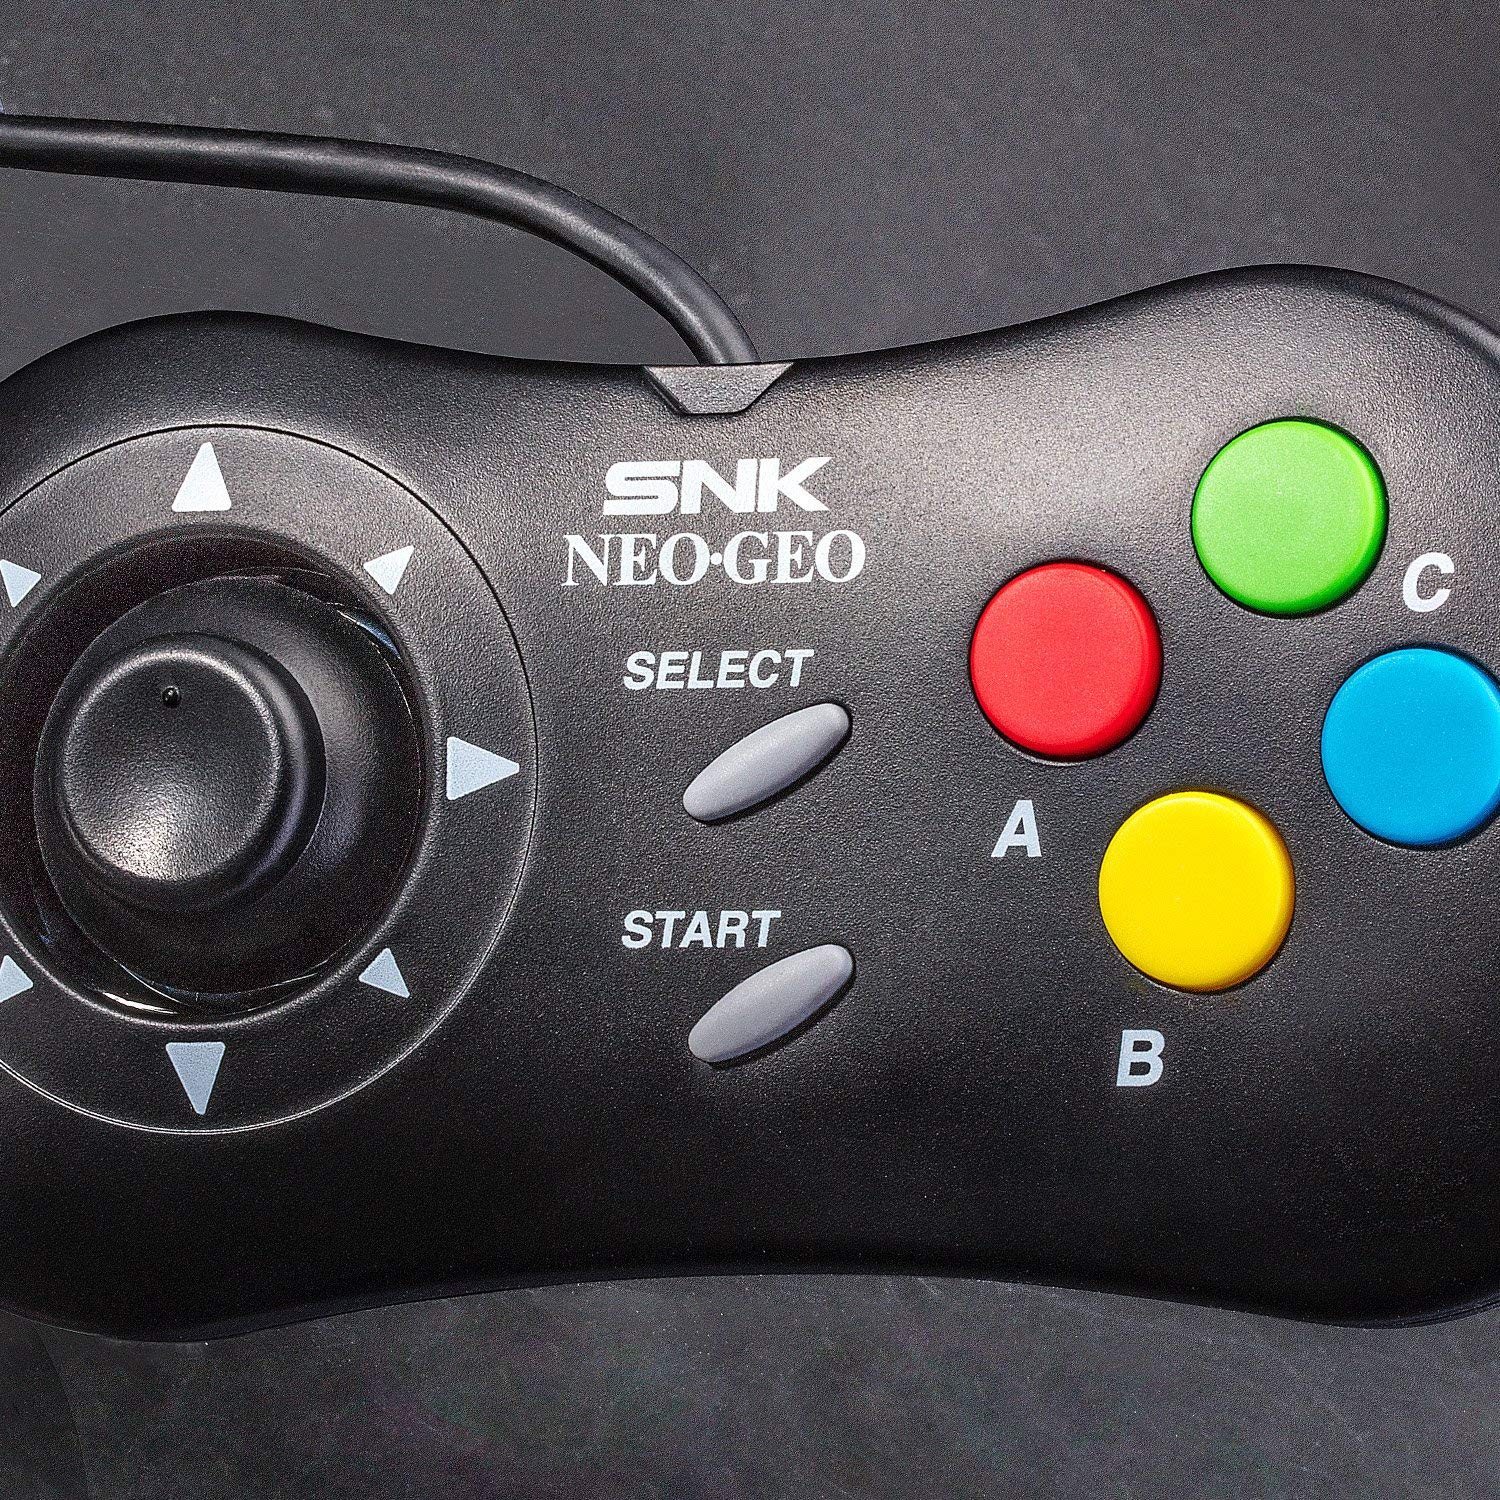 NEO GEO Mini Arcade Console SNK - Solaris Japan